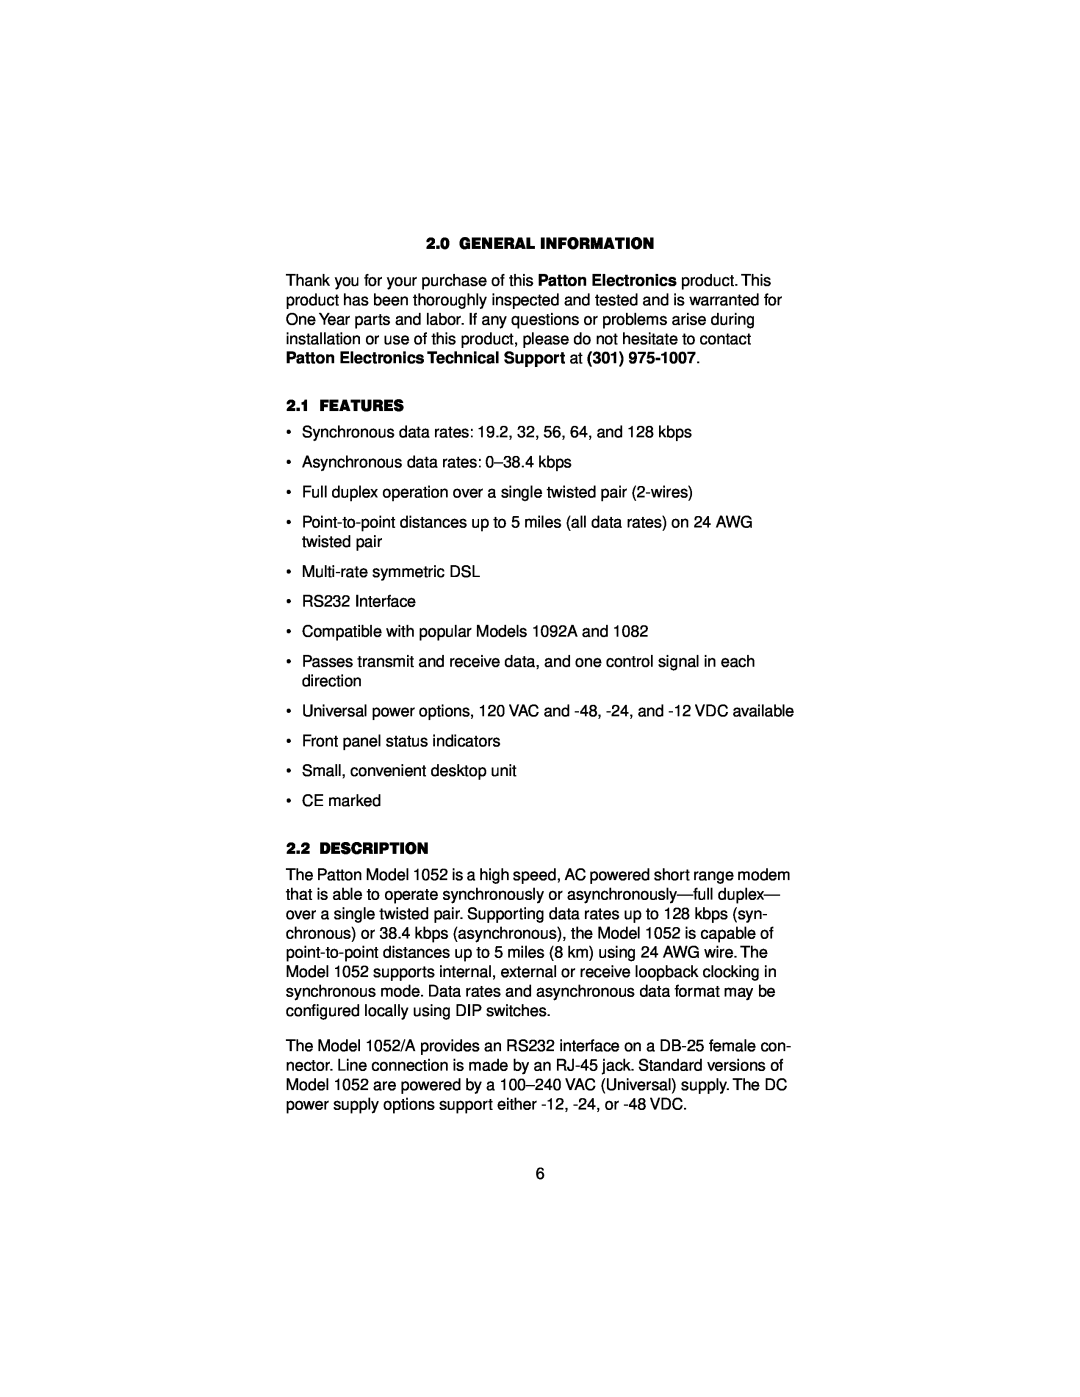 Patton electronic 1052 user manual General Information, Features, Description 